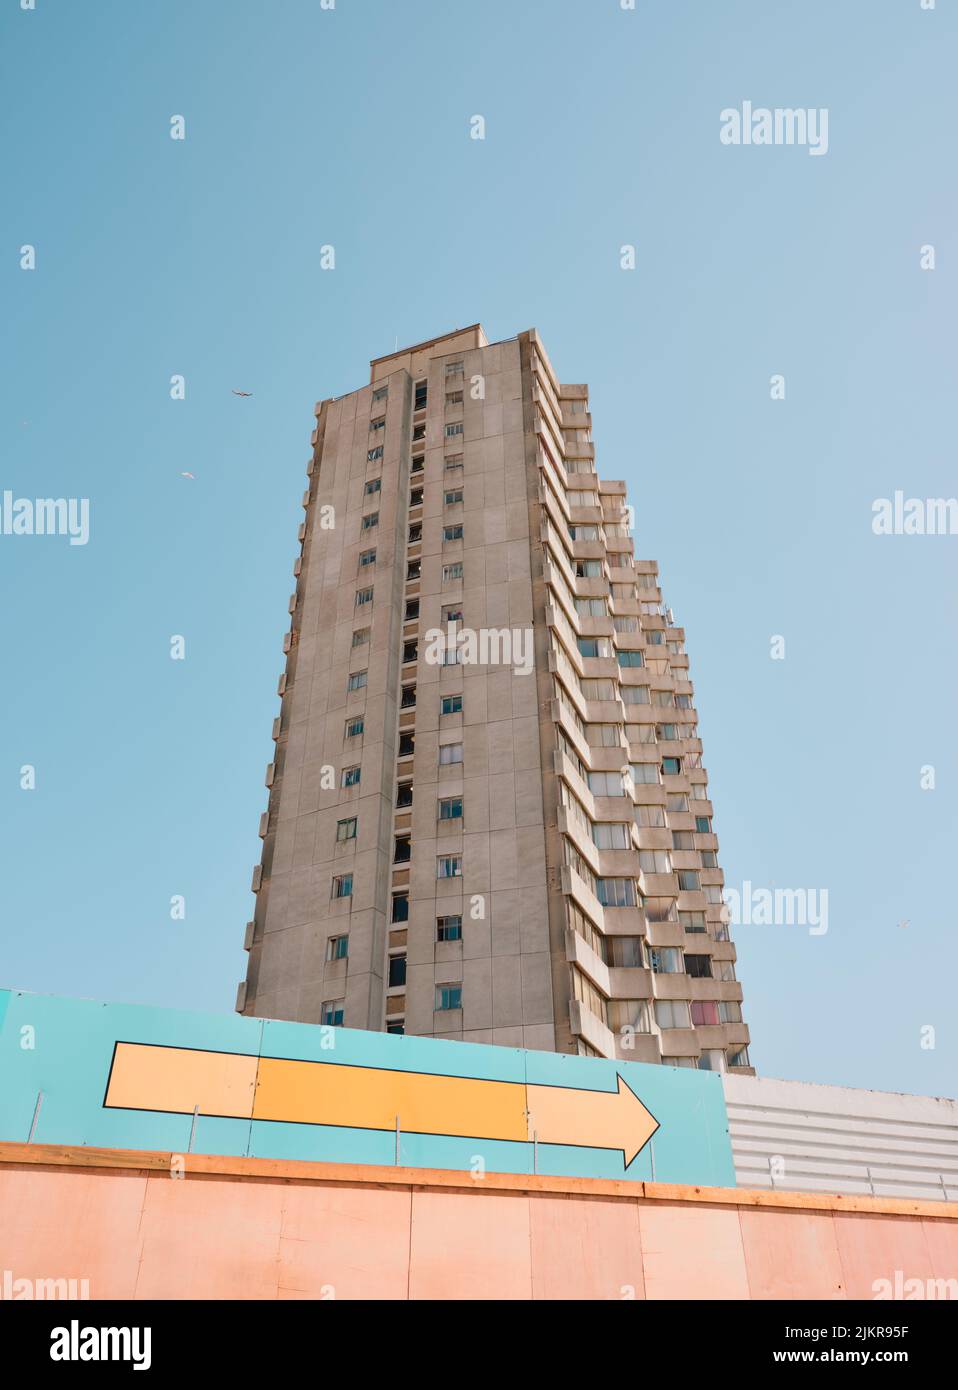 Arlington House tower block 58-metre high 18 storey residential apartment block, Margate Kent, England UK. Built 1964 brutalist brutalism architecture Stock Photo